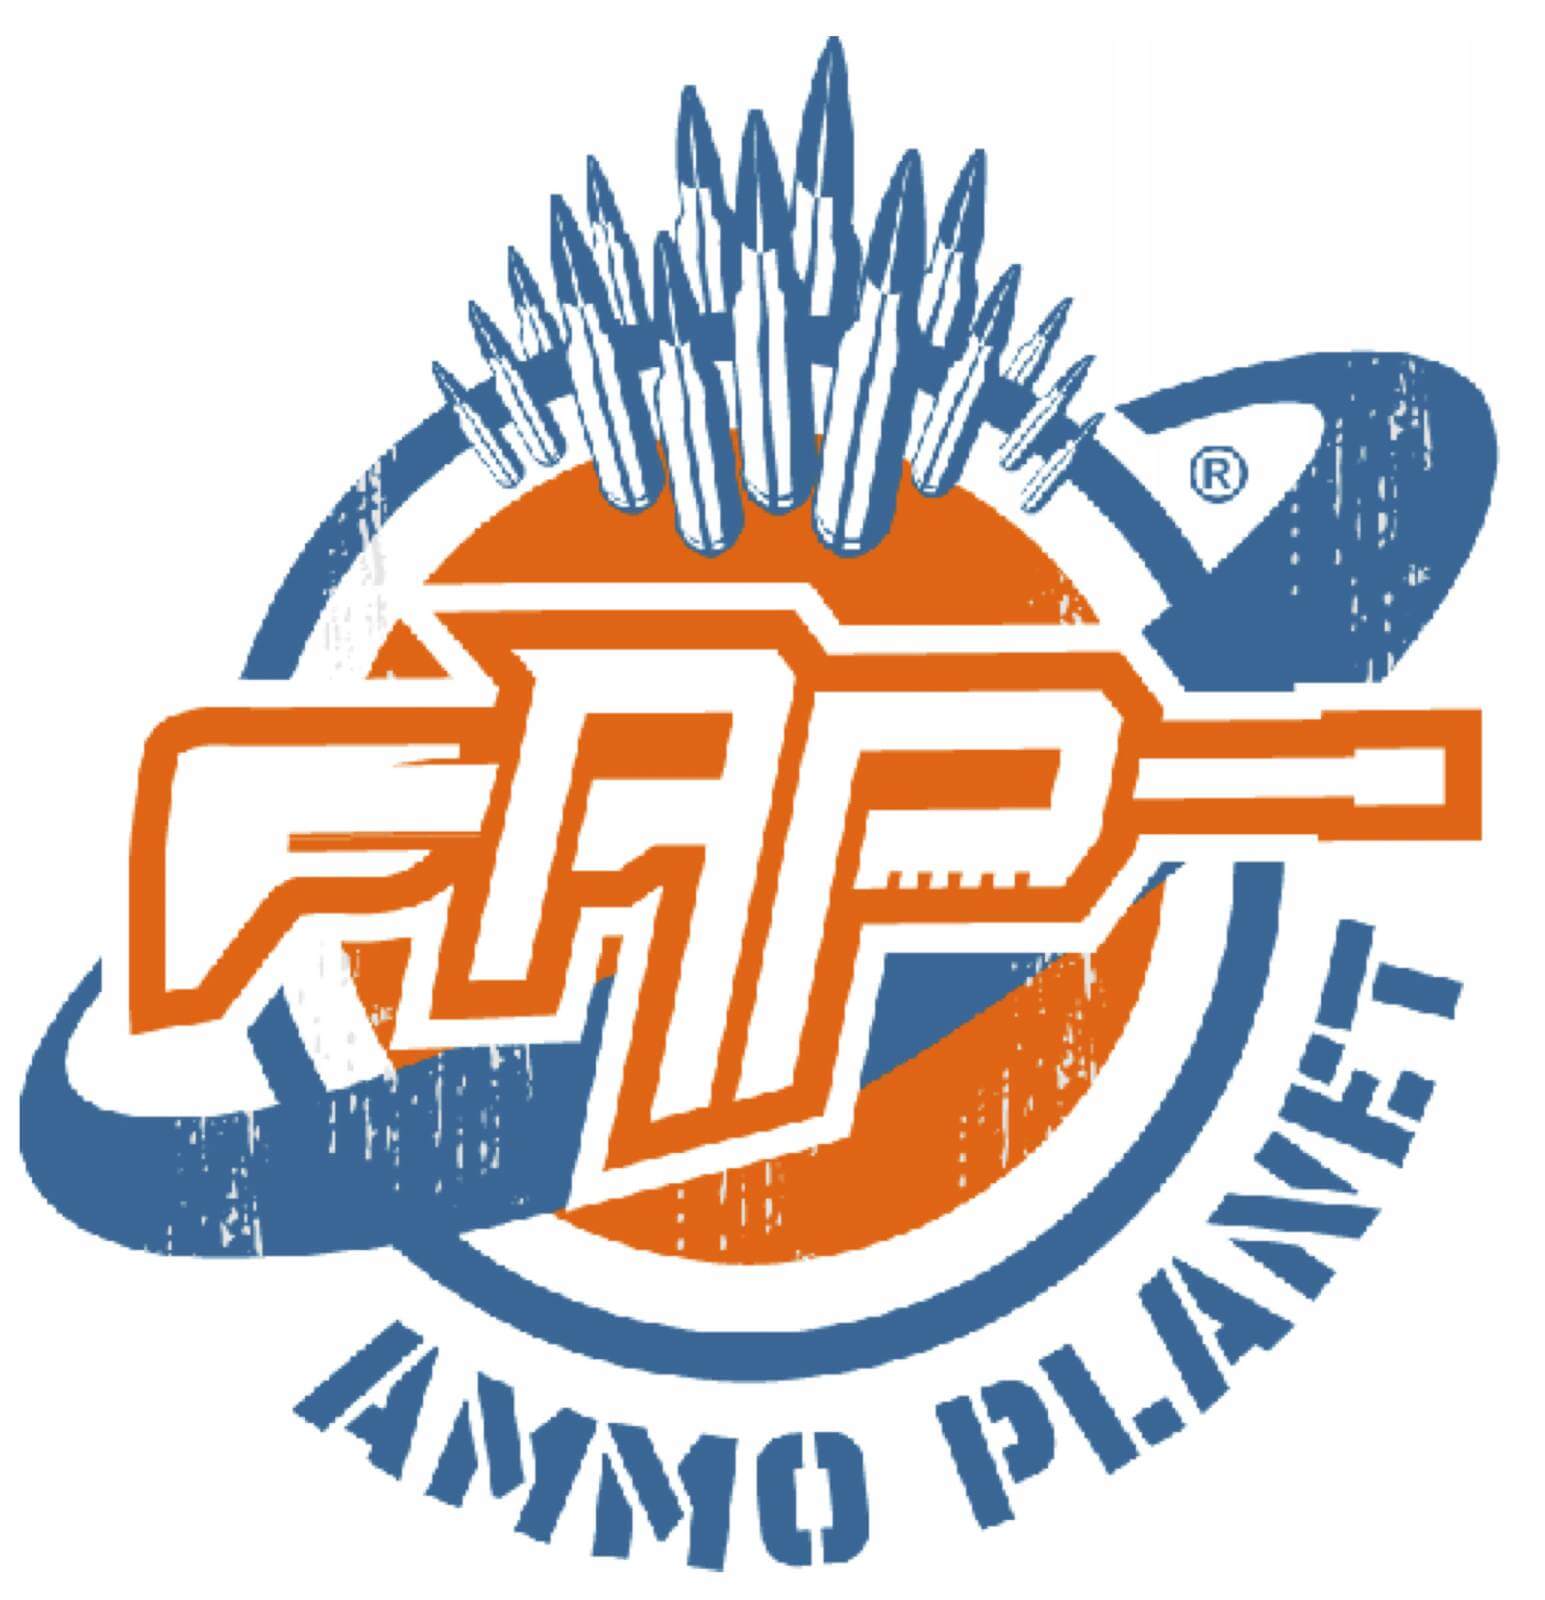 Ammo Planet